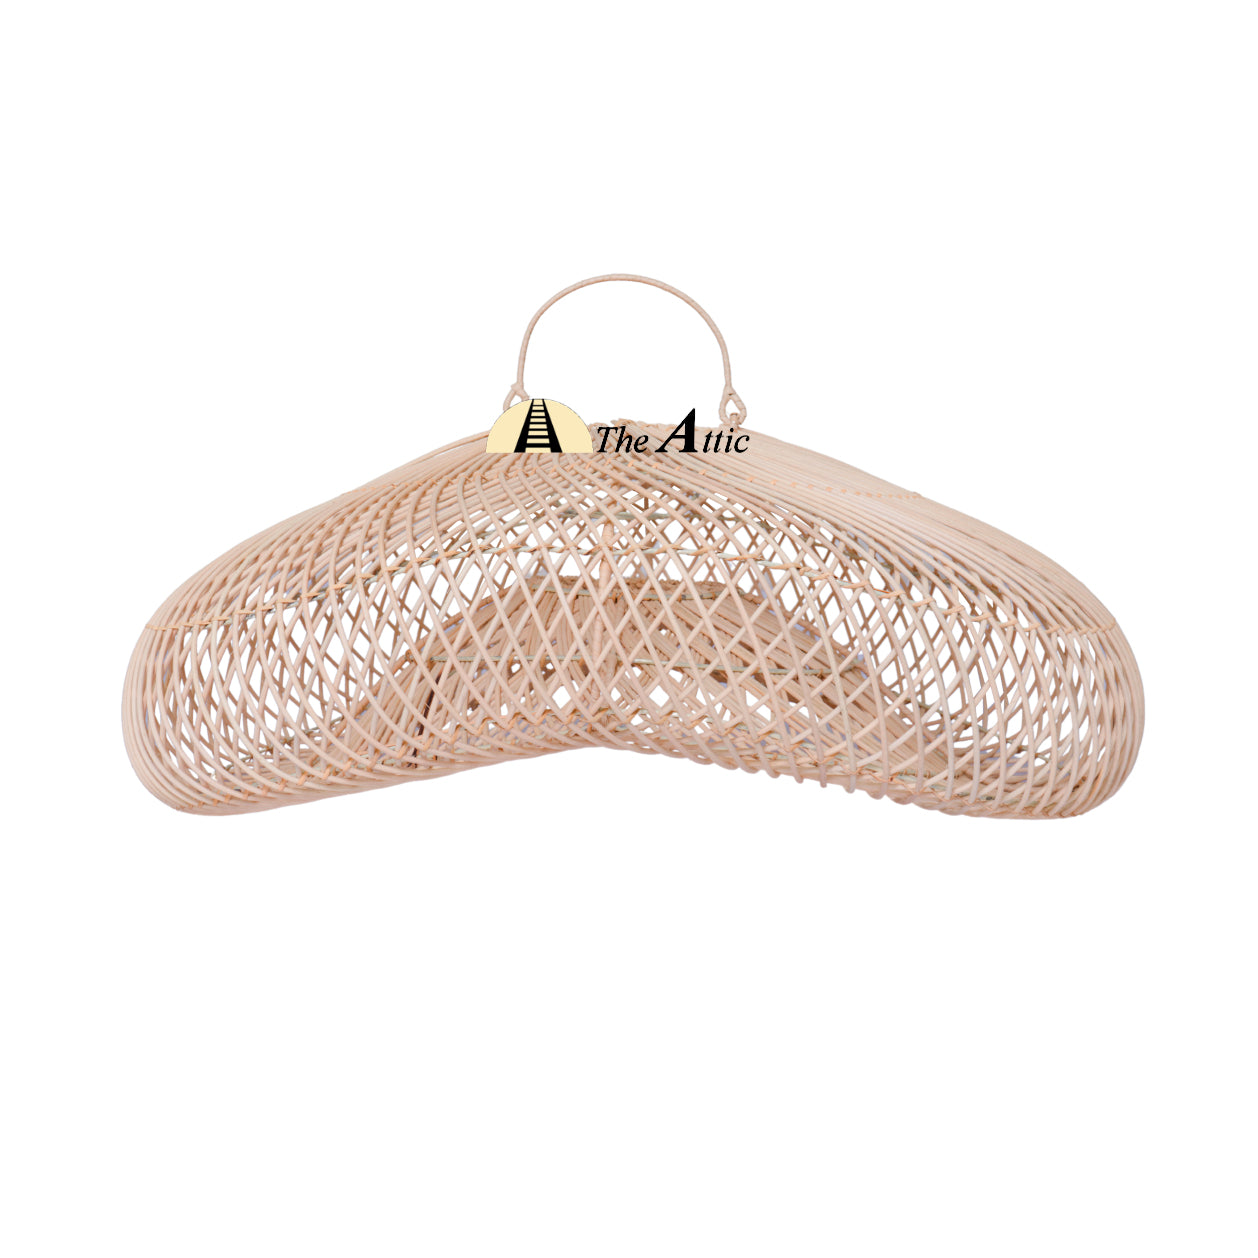 Kerang Rattan Pendant, Ceiling Lamp Shade, Rattan Furniture - The Attic Dubai